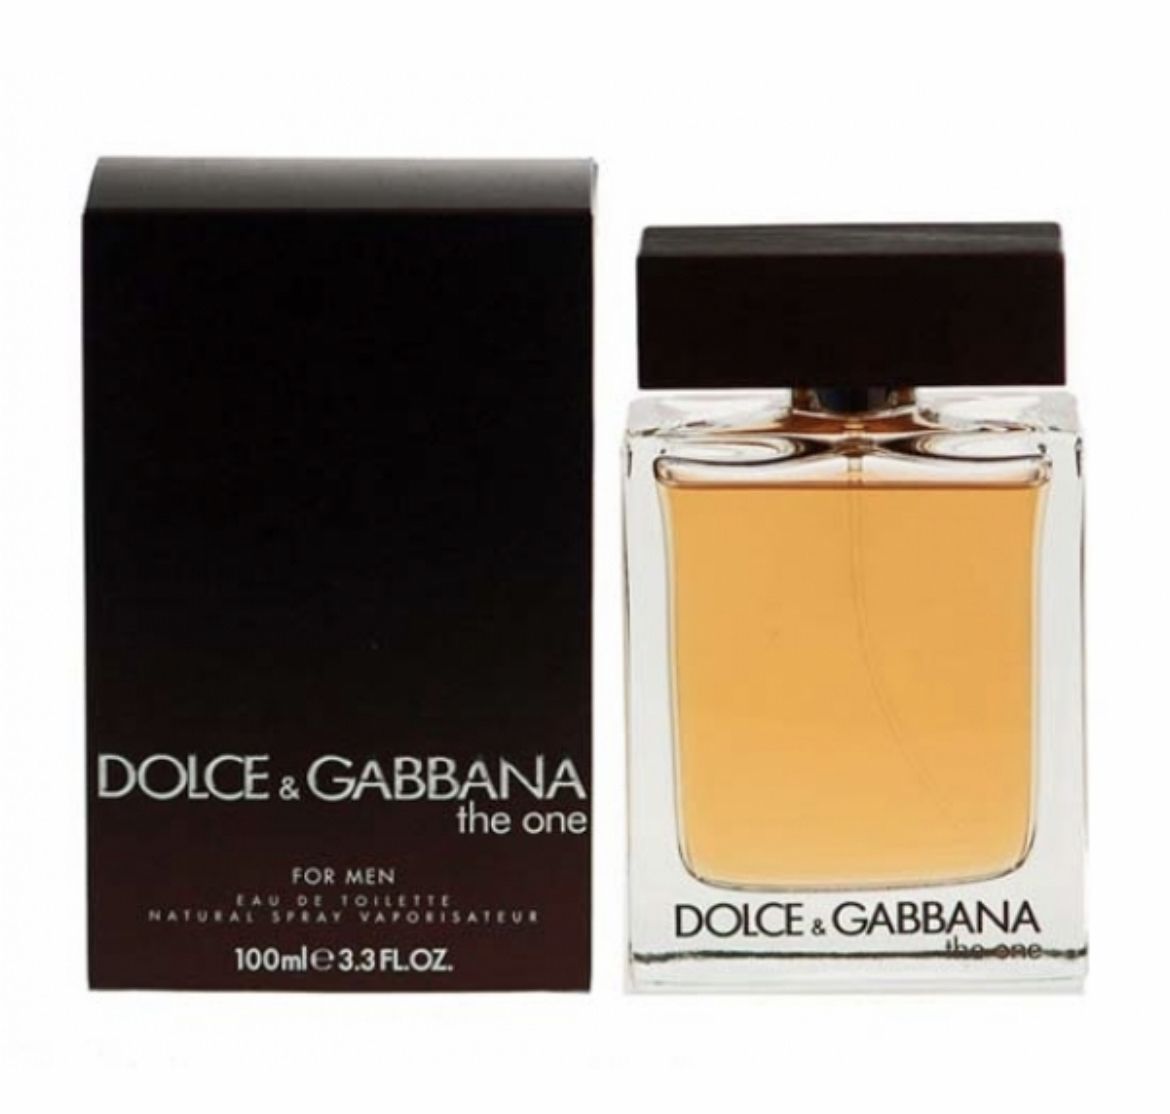 Дольче габбана мужские отзывы. Dolce Gabbana the one for men 100 мл. Dolce Gabbana the one for men 100ml. Dolce Gabbana the one for men 100ml EDT. Dolce Gabbana the one 100ml.